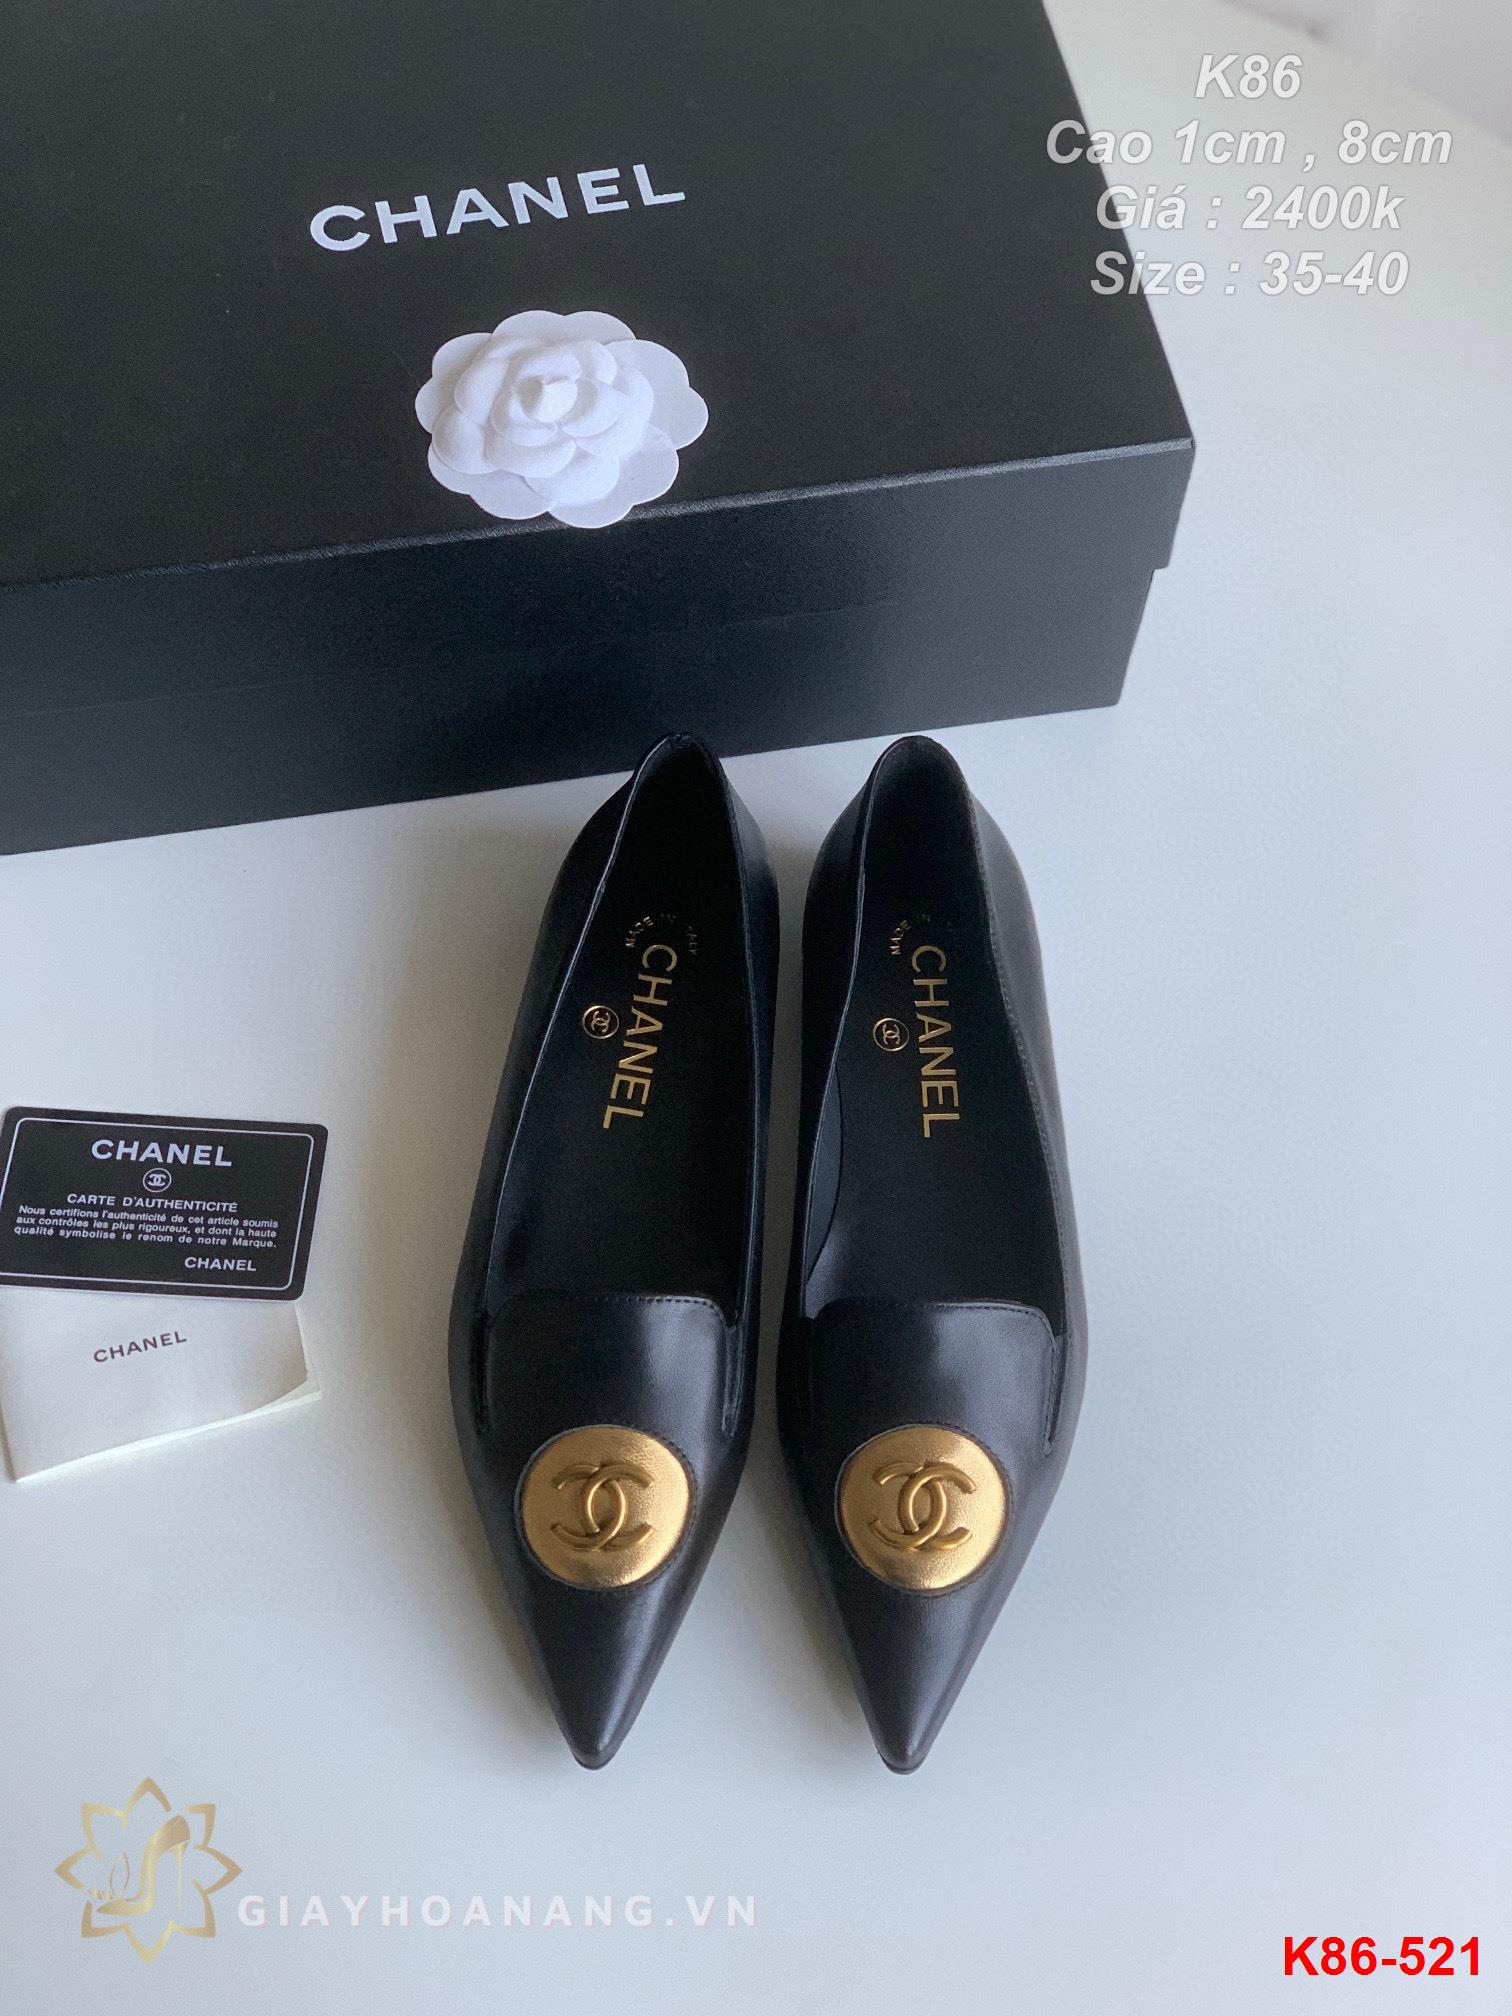 K86-521 Chanel giày cao 1cm , 8cm siêu cấp